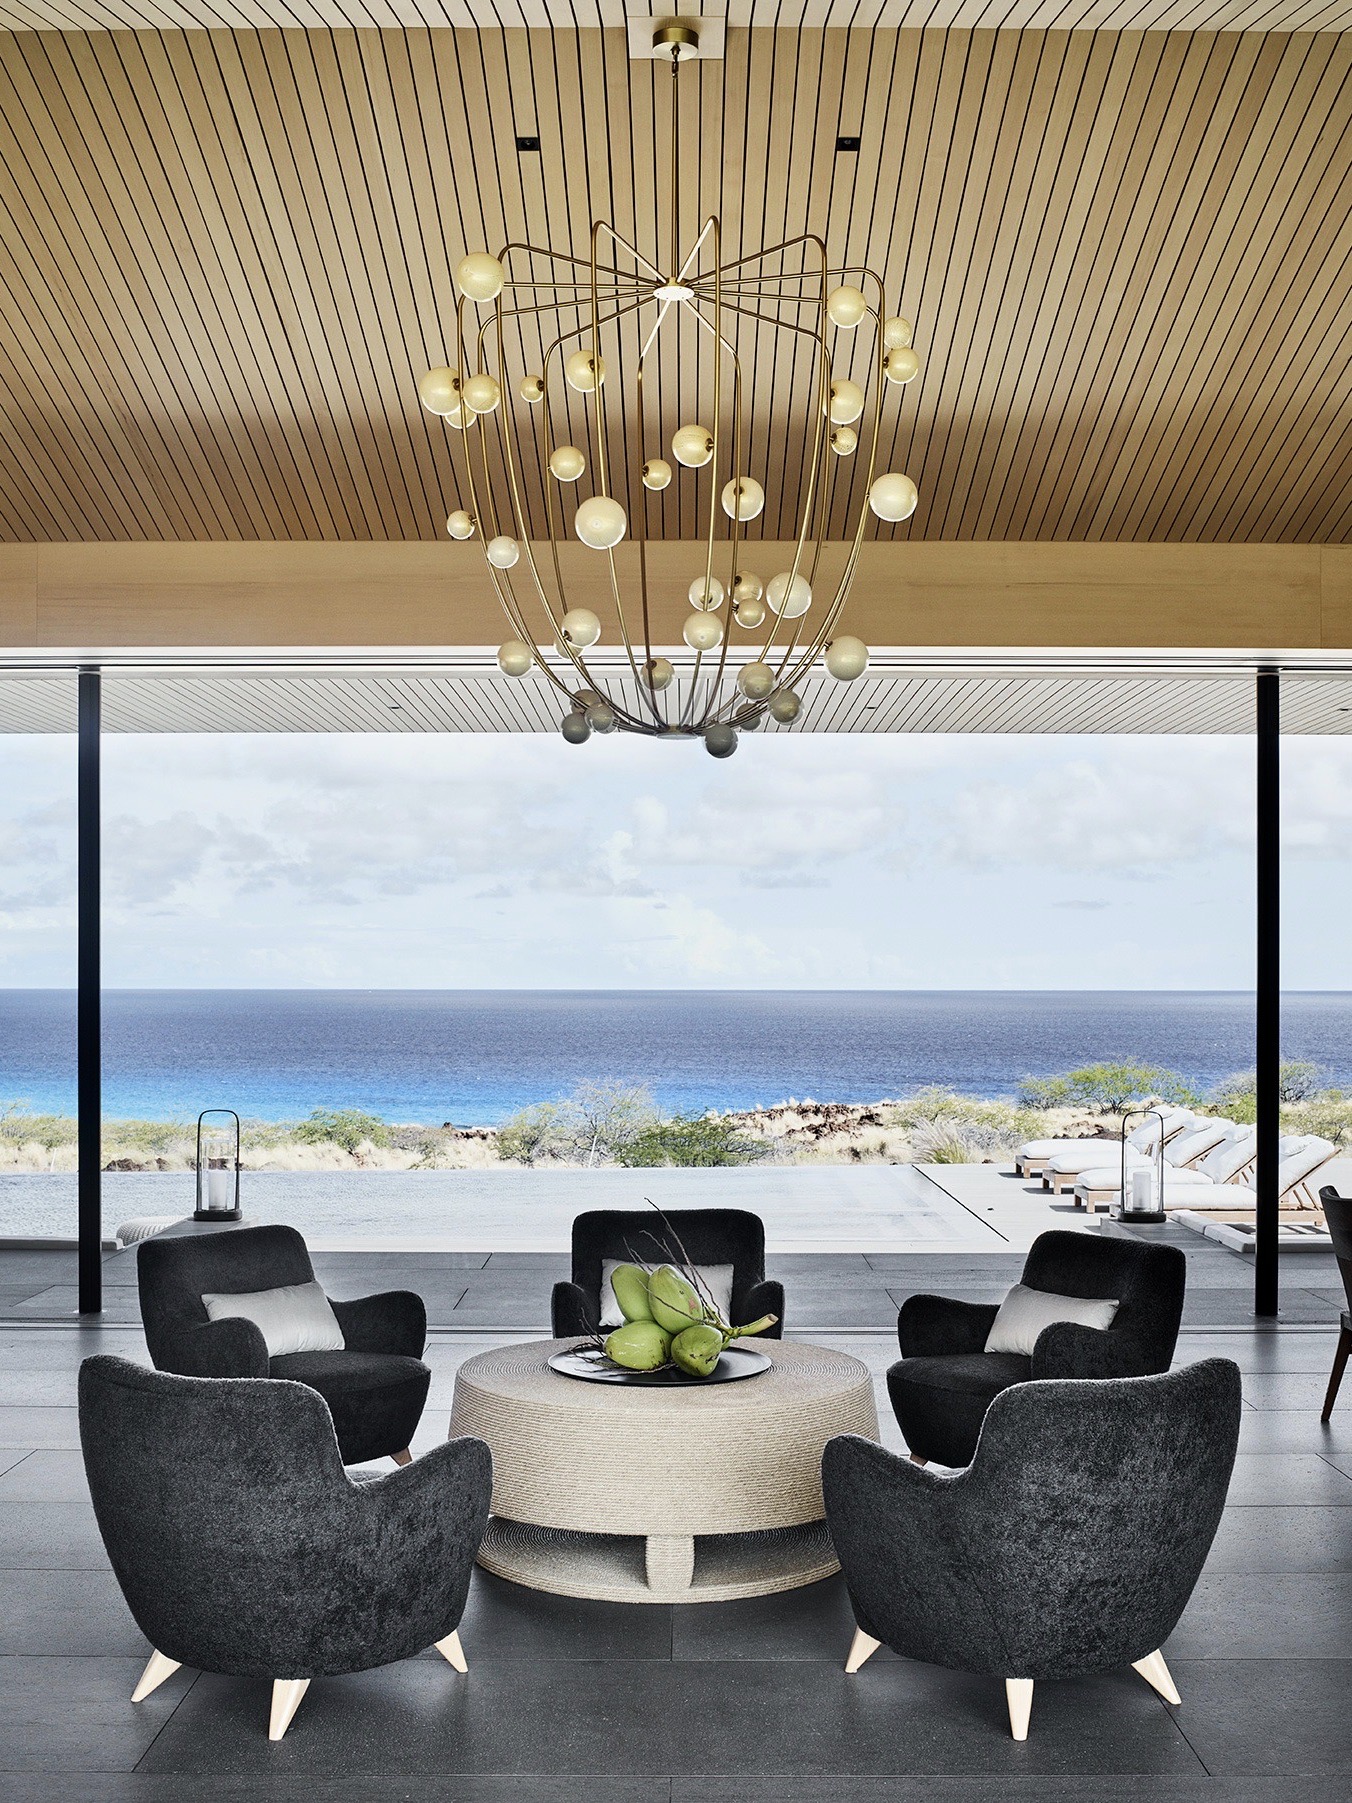 Kua Bay villa salon vue sur océan Pacifique